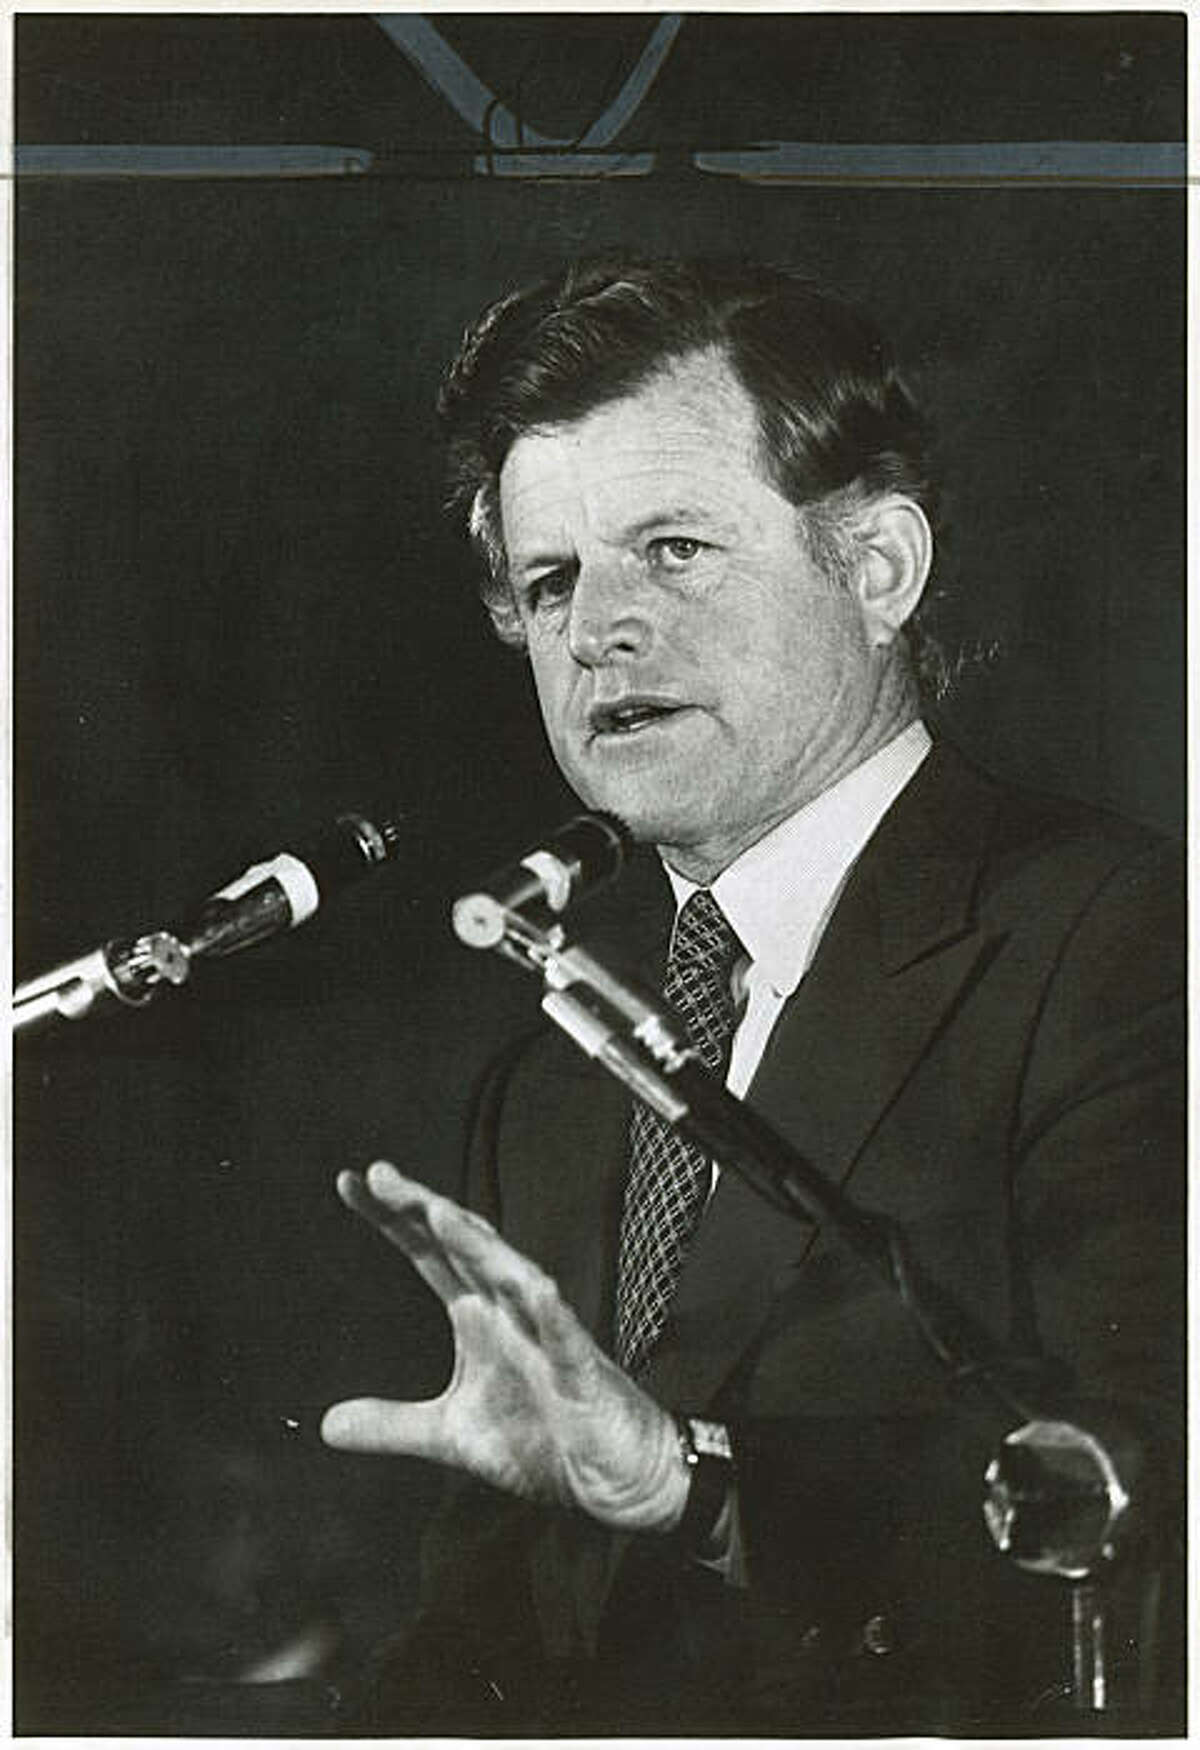 TEDKENNEDY_4.jpg December 8, 1979-Senator Edward F. Kennedy, also known as Ted Kennedy, speaks at the Democratic party reception at the Hyatt Regency, in San Francisco, Calif., December 8, 1979. john o'hara/staff photographer